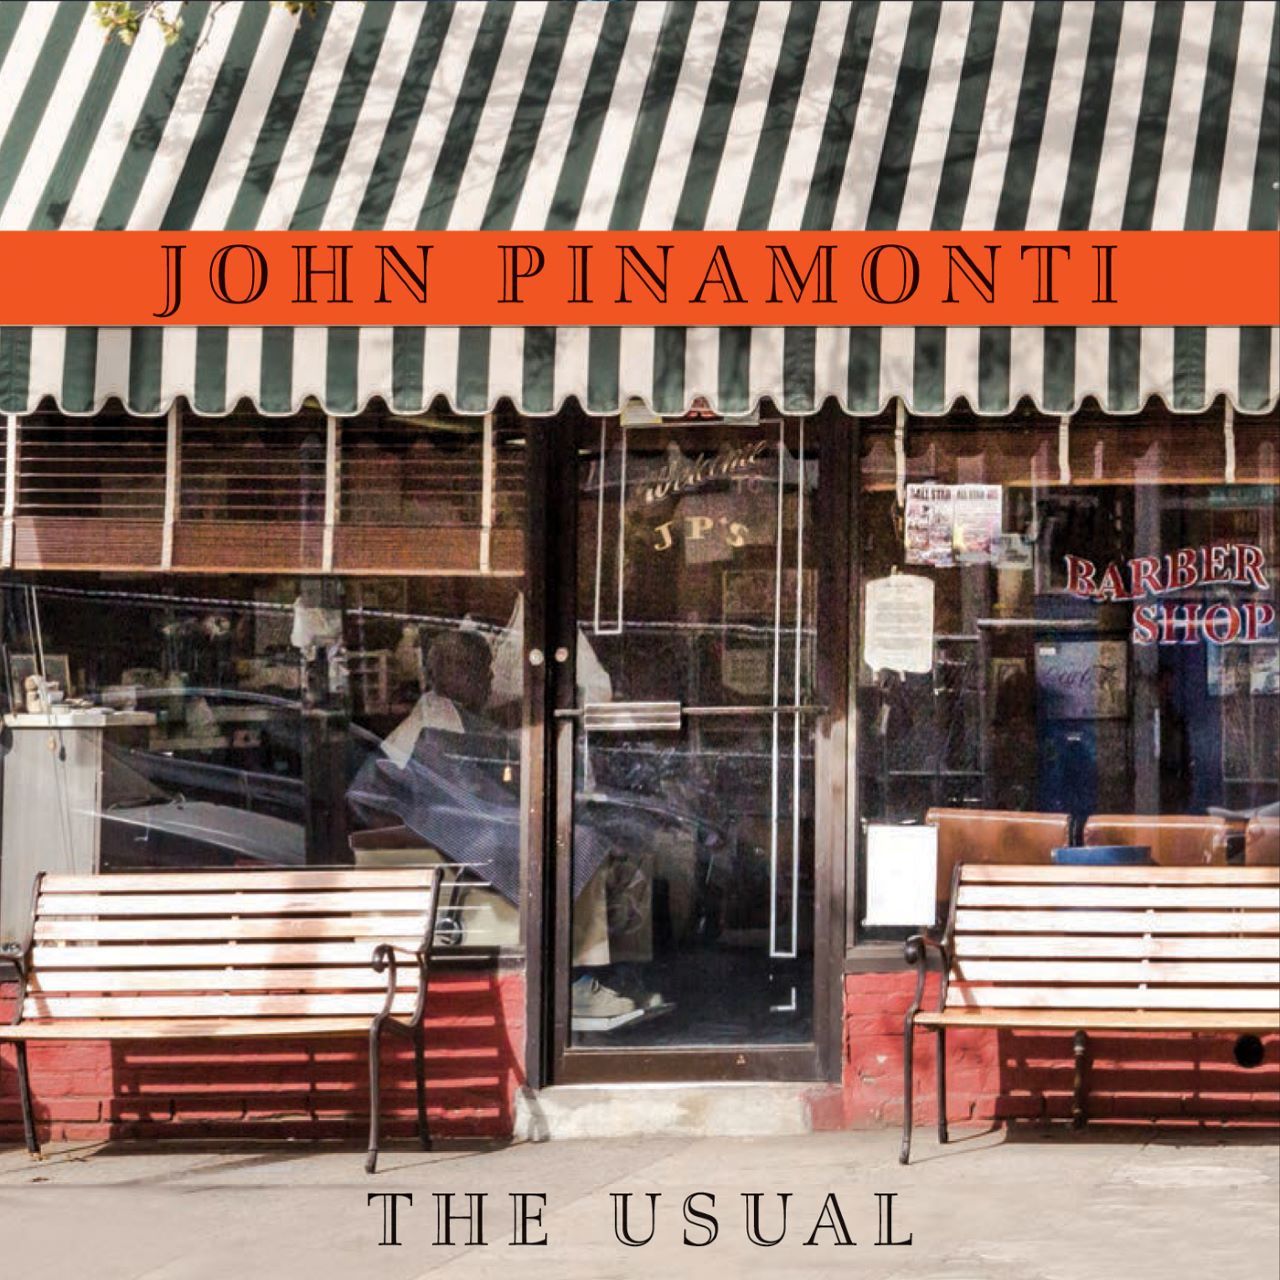 John Pinamonti - The Usual cover album